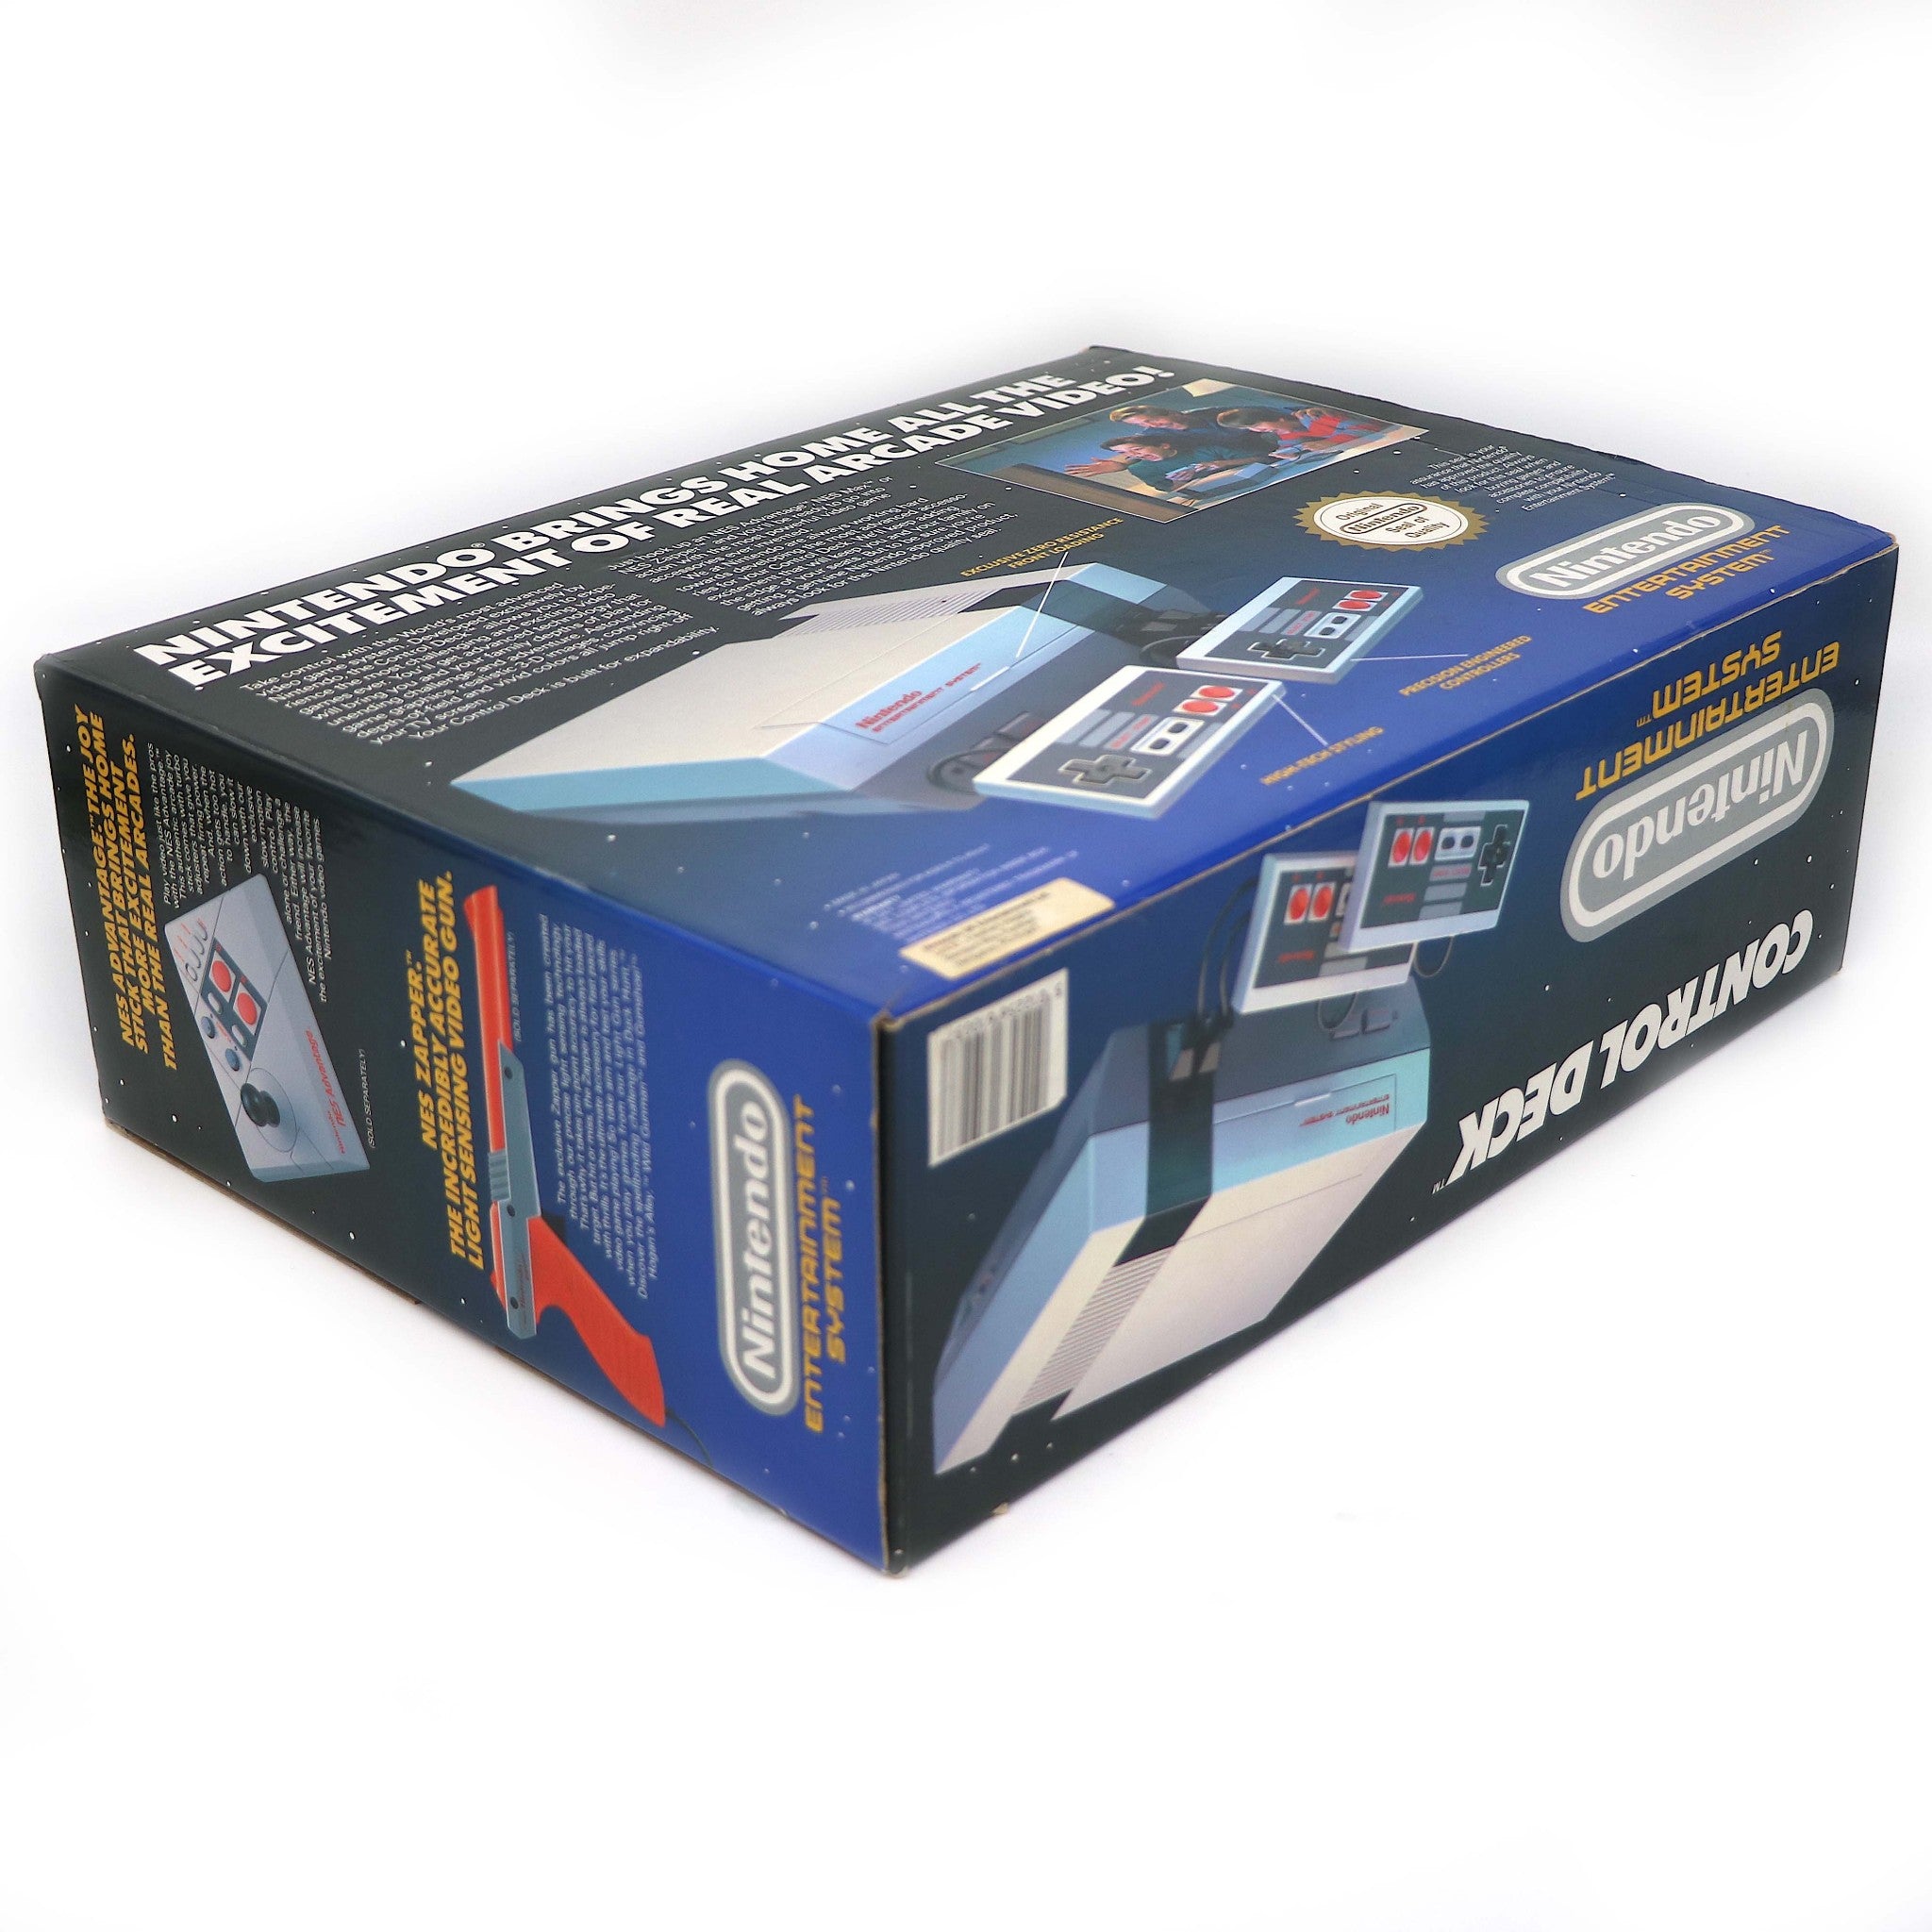 NES Nintendo Entertainment System Console | Super Mario 3 Bros Game Pak | Boxed